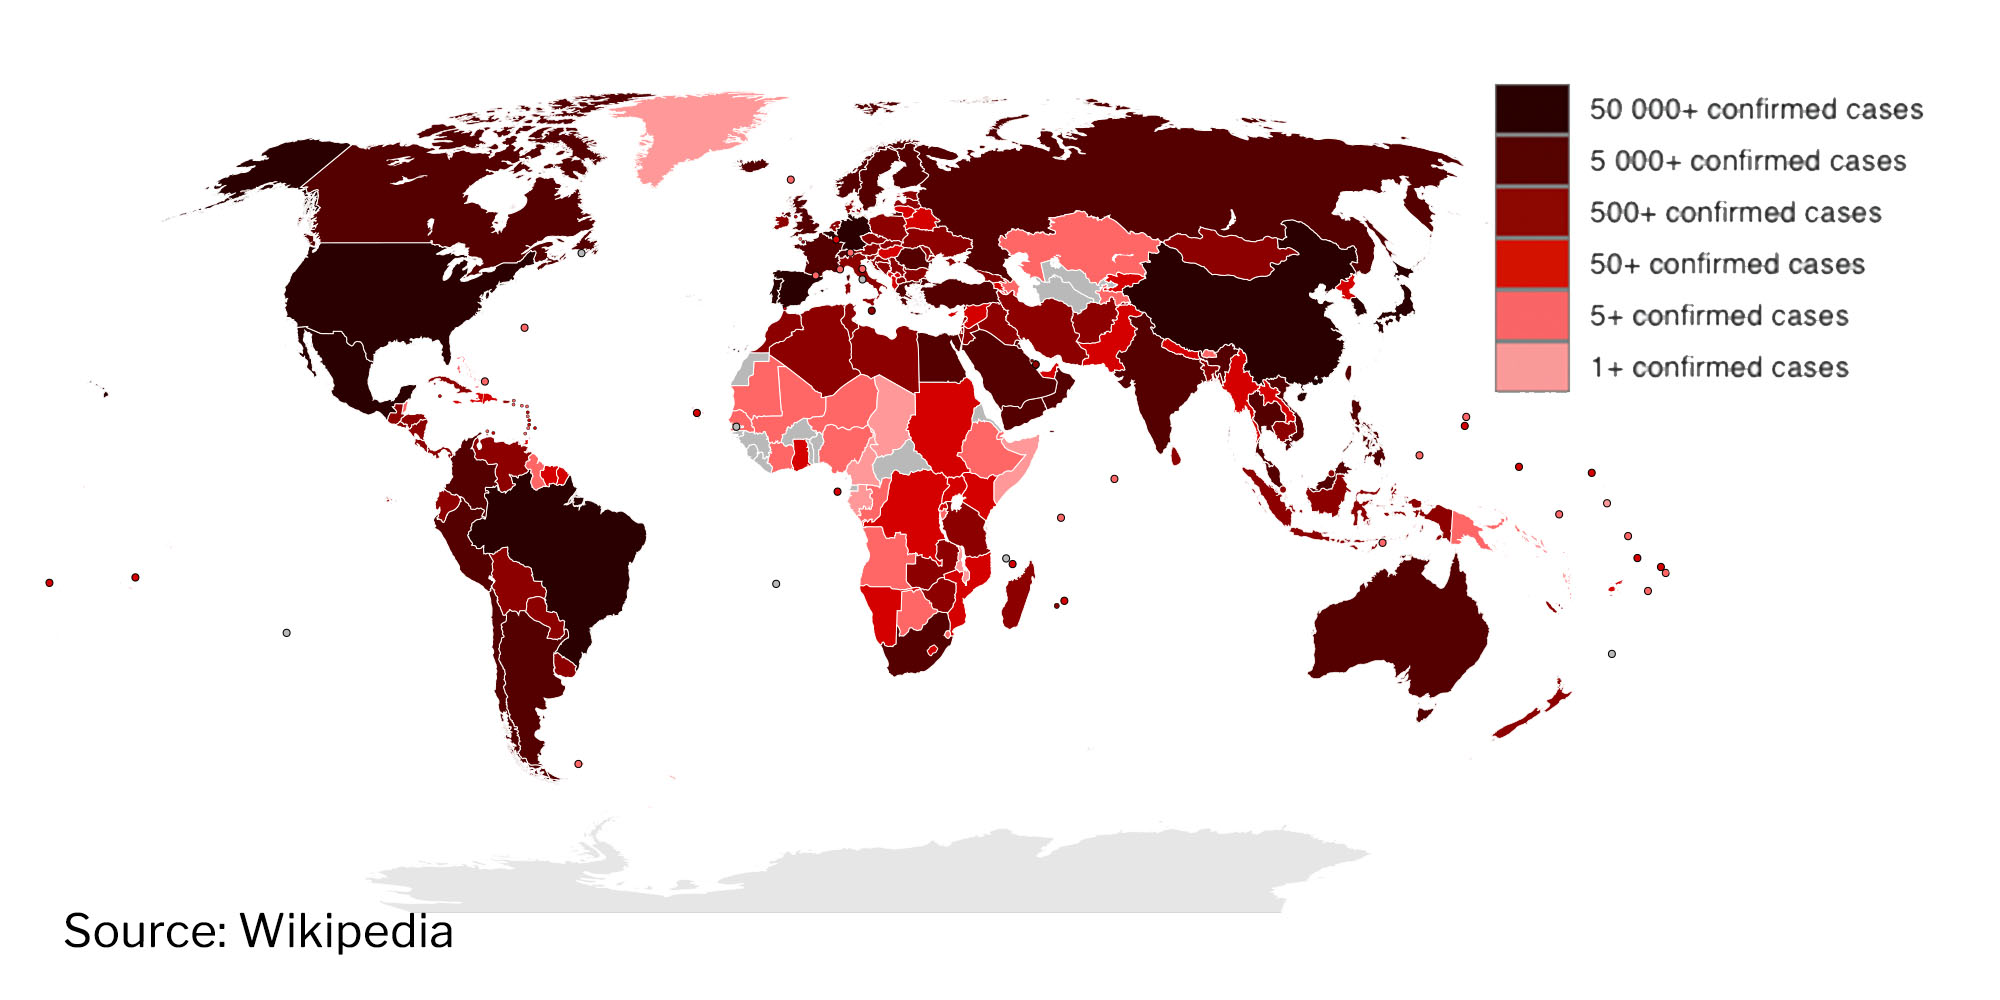 H1N1 Pandemic cases worldwide